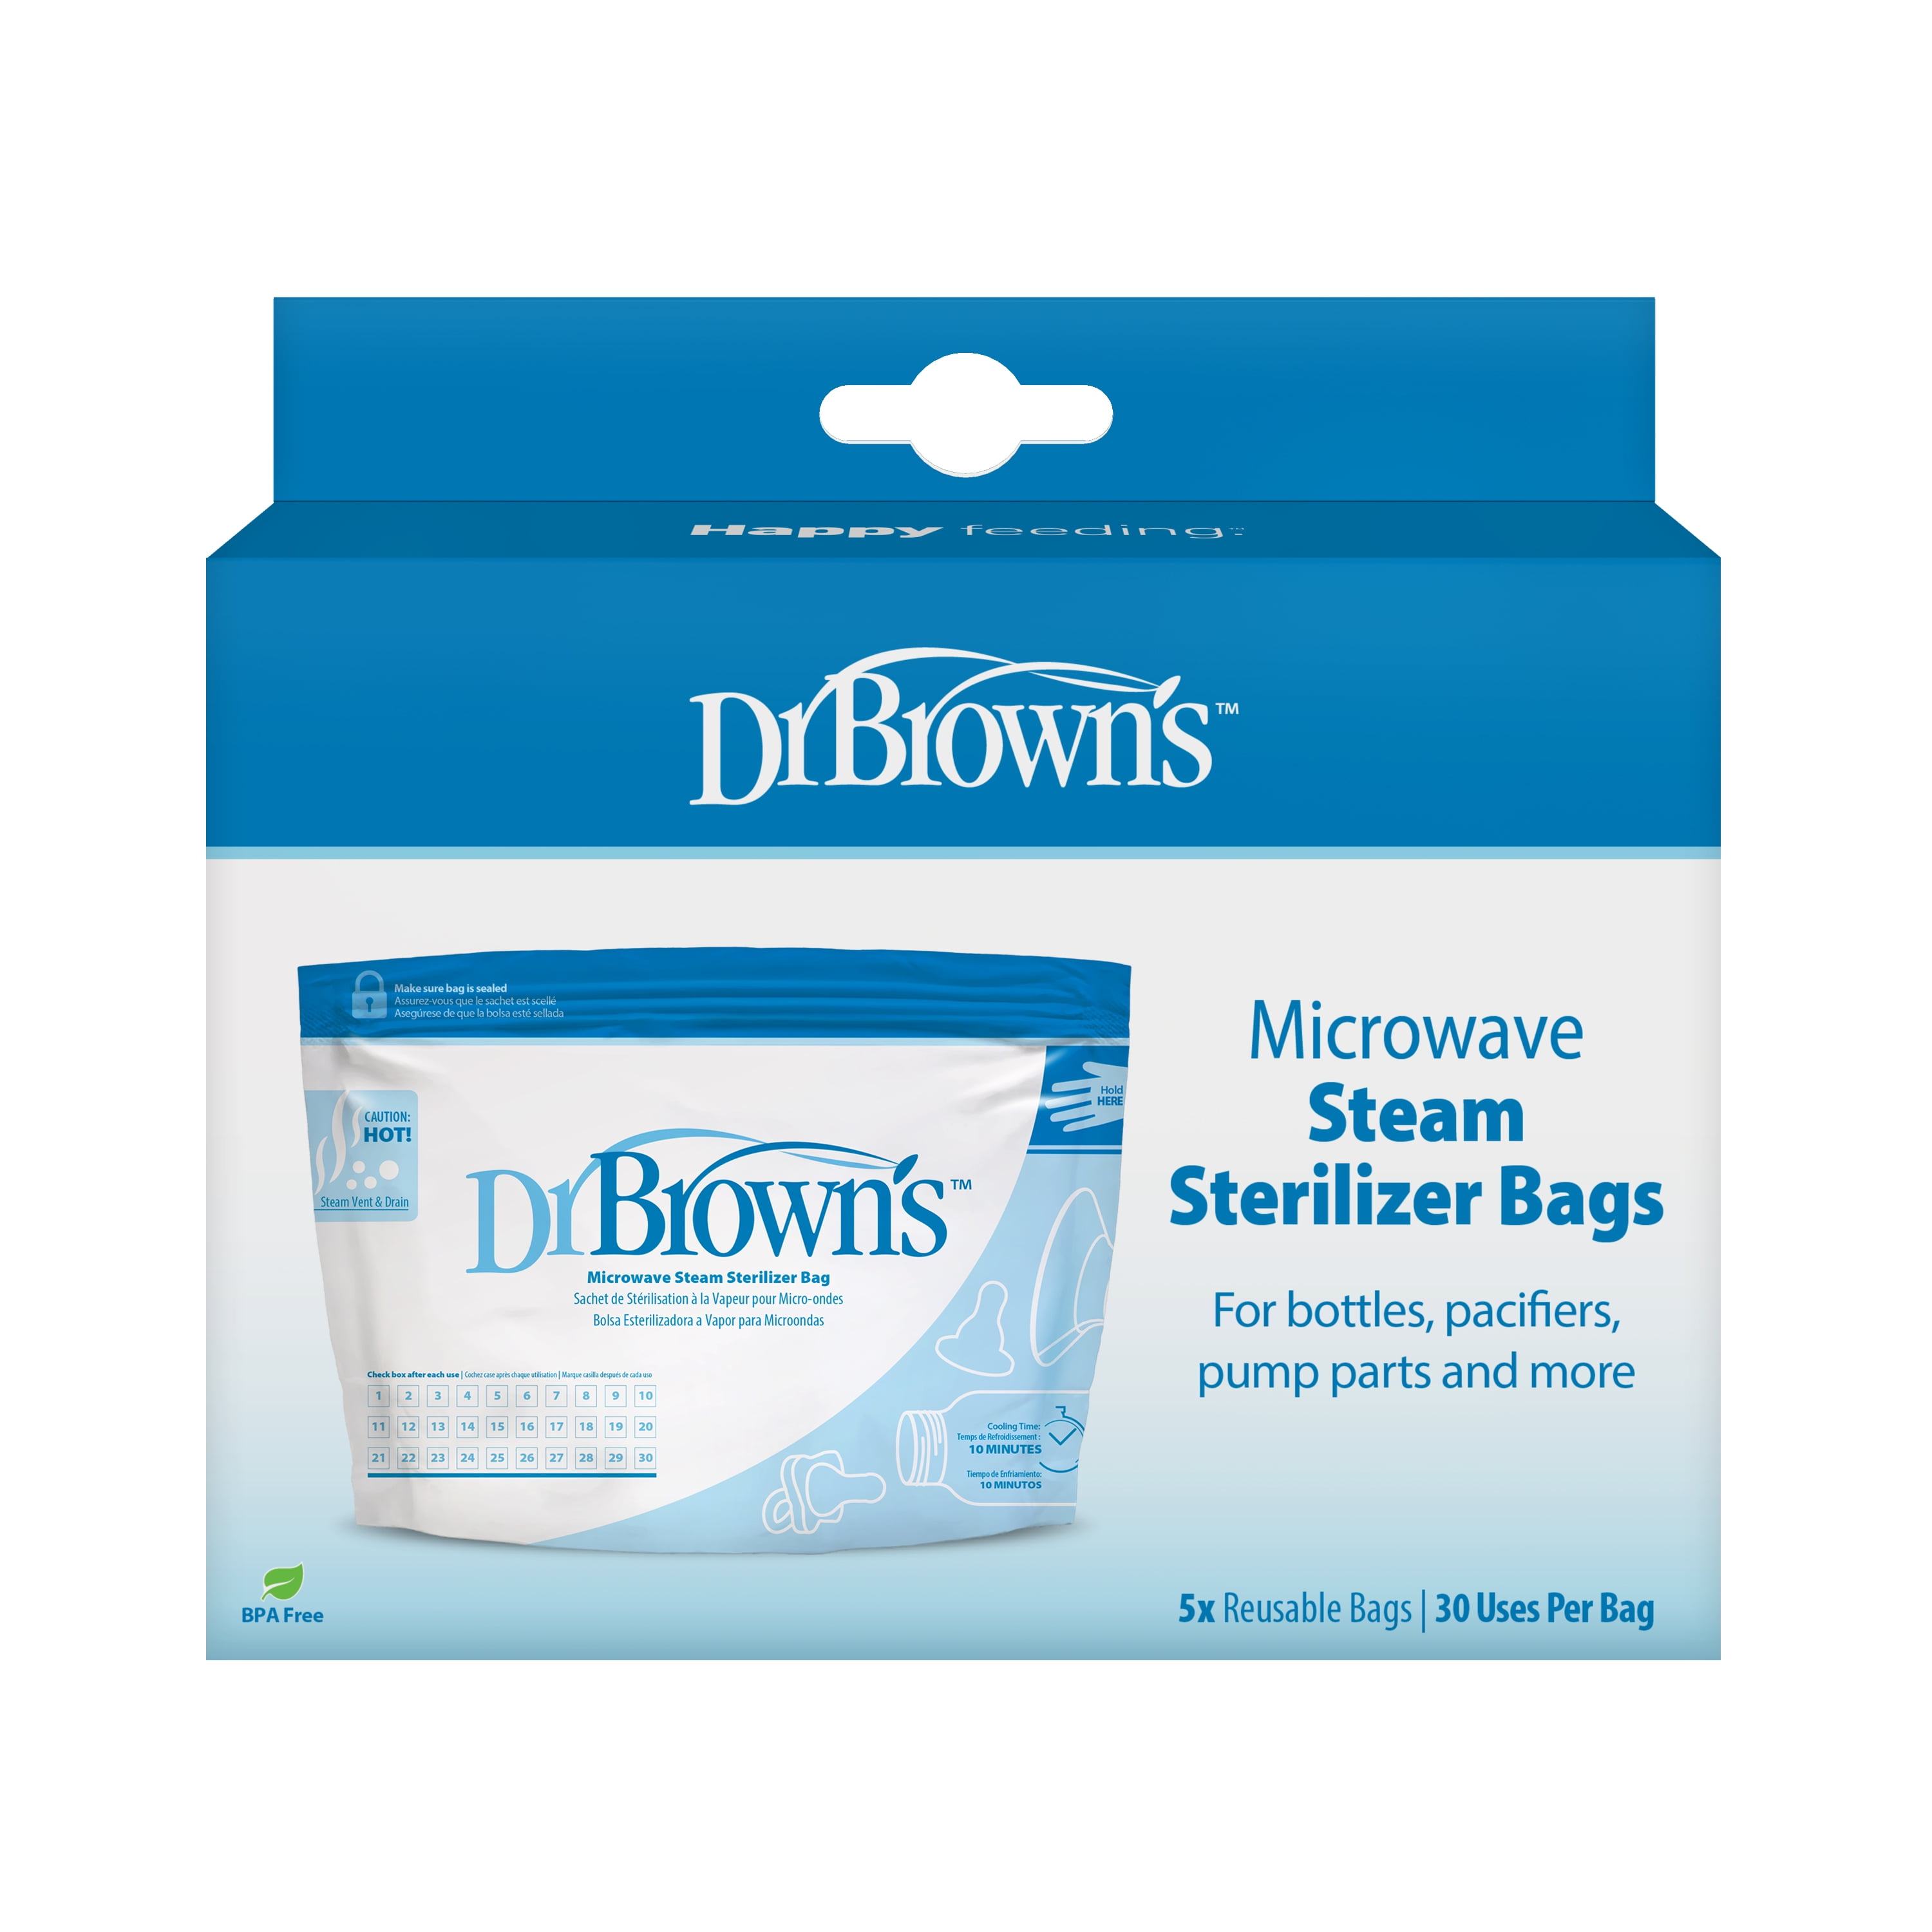 Microwave steriliser bags for efficient sterilising